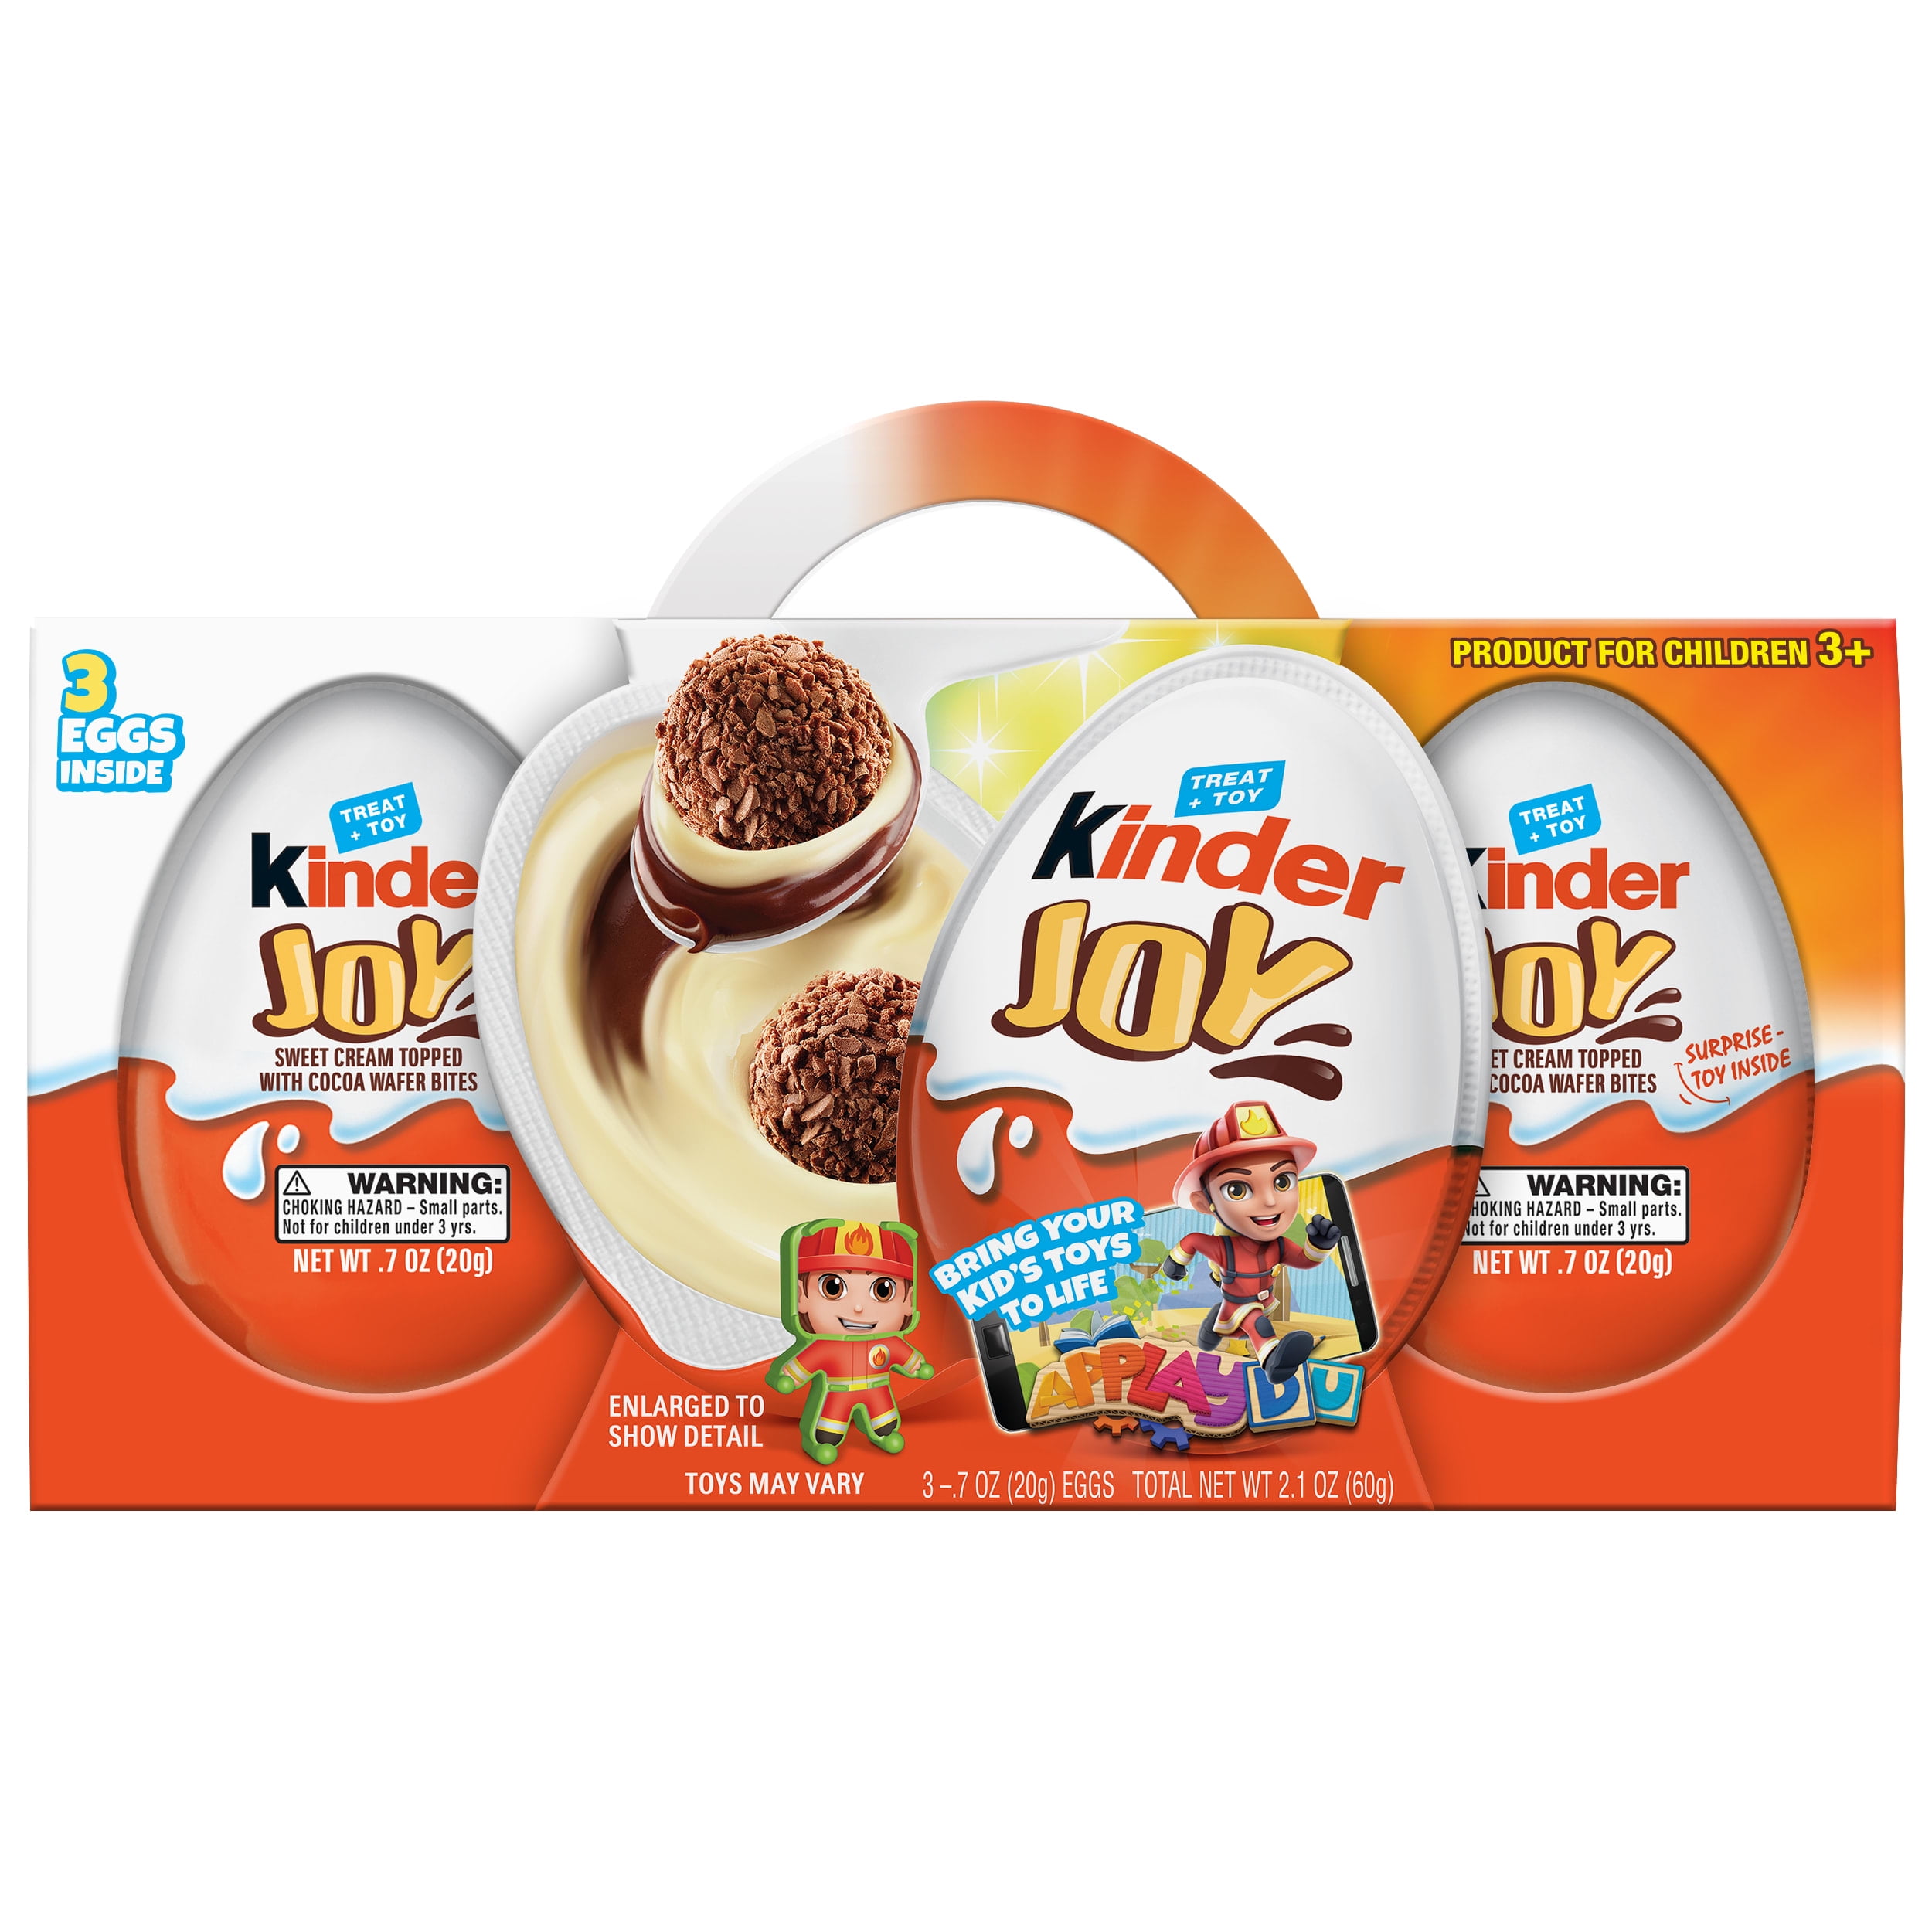 Achetez Kinder Creamy Milky & Crunchy - Pop's America